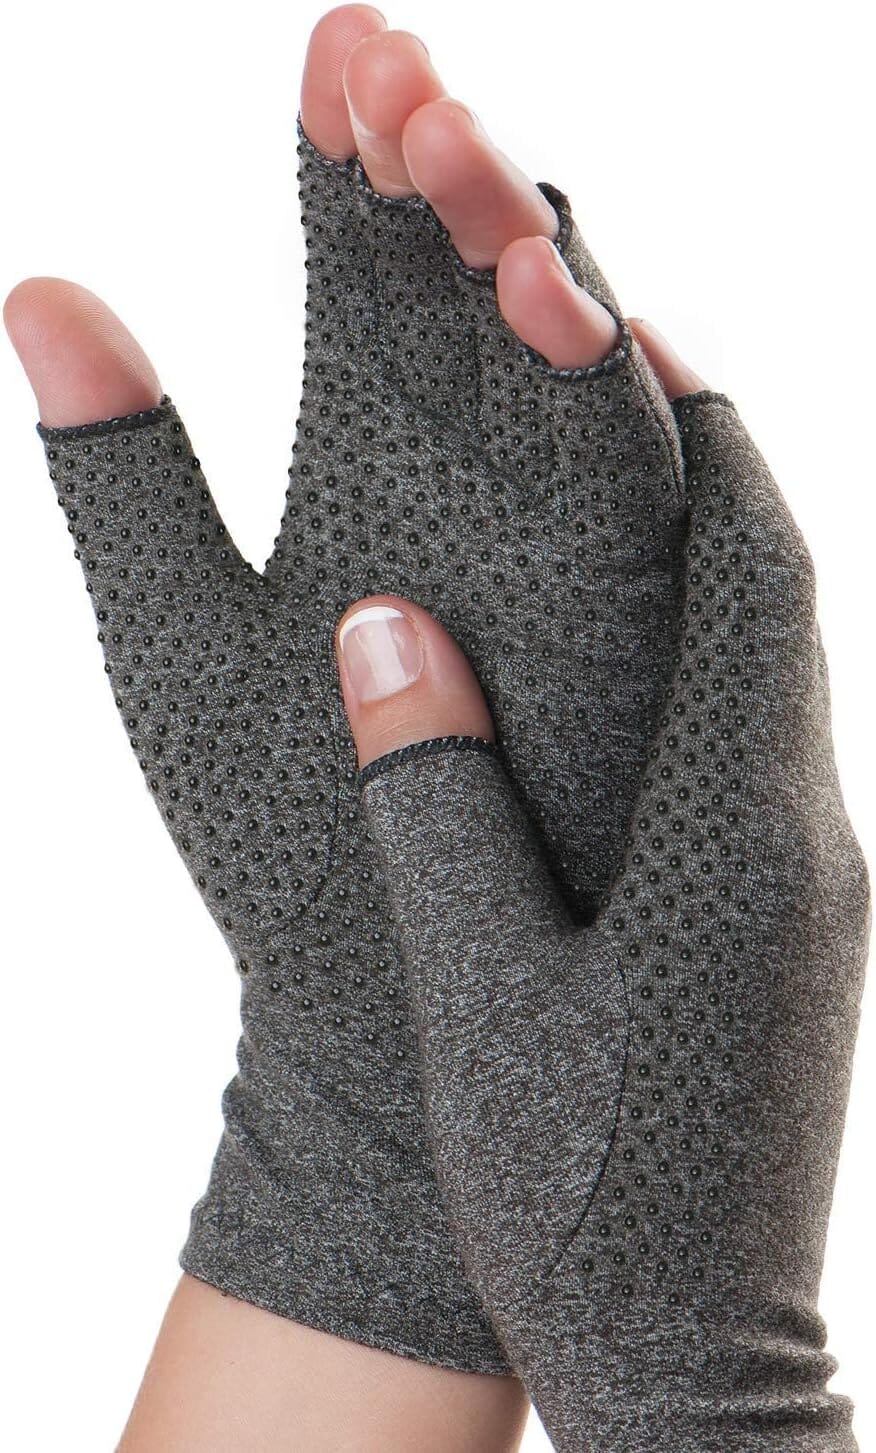 Dr. Frederick&#39;s Original Grippy Arthritis Gloves for Women &amp; Men - Anti-Slip Compression Gloves for Arthritis Pain Relief Hand Pain Dr. Frederick&#39;s Original 